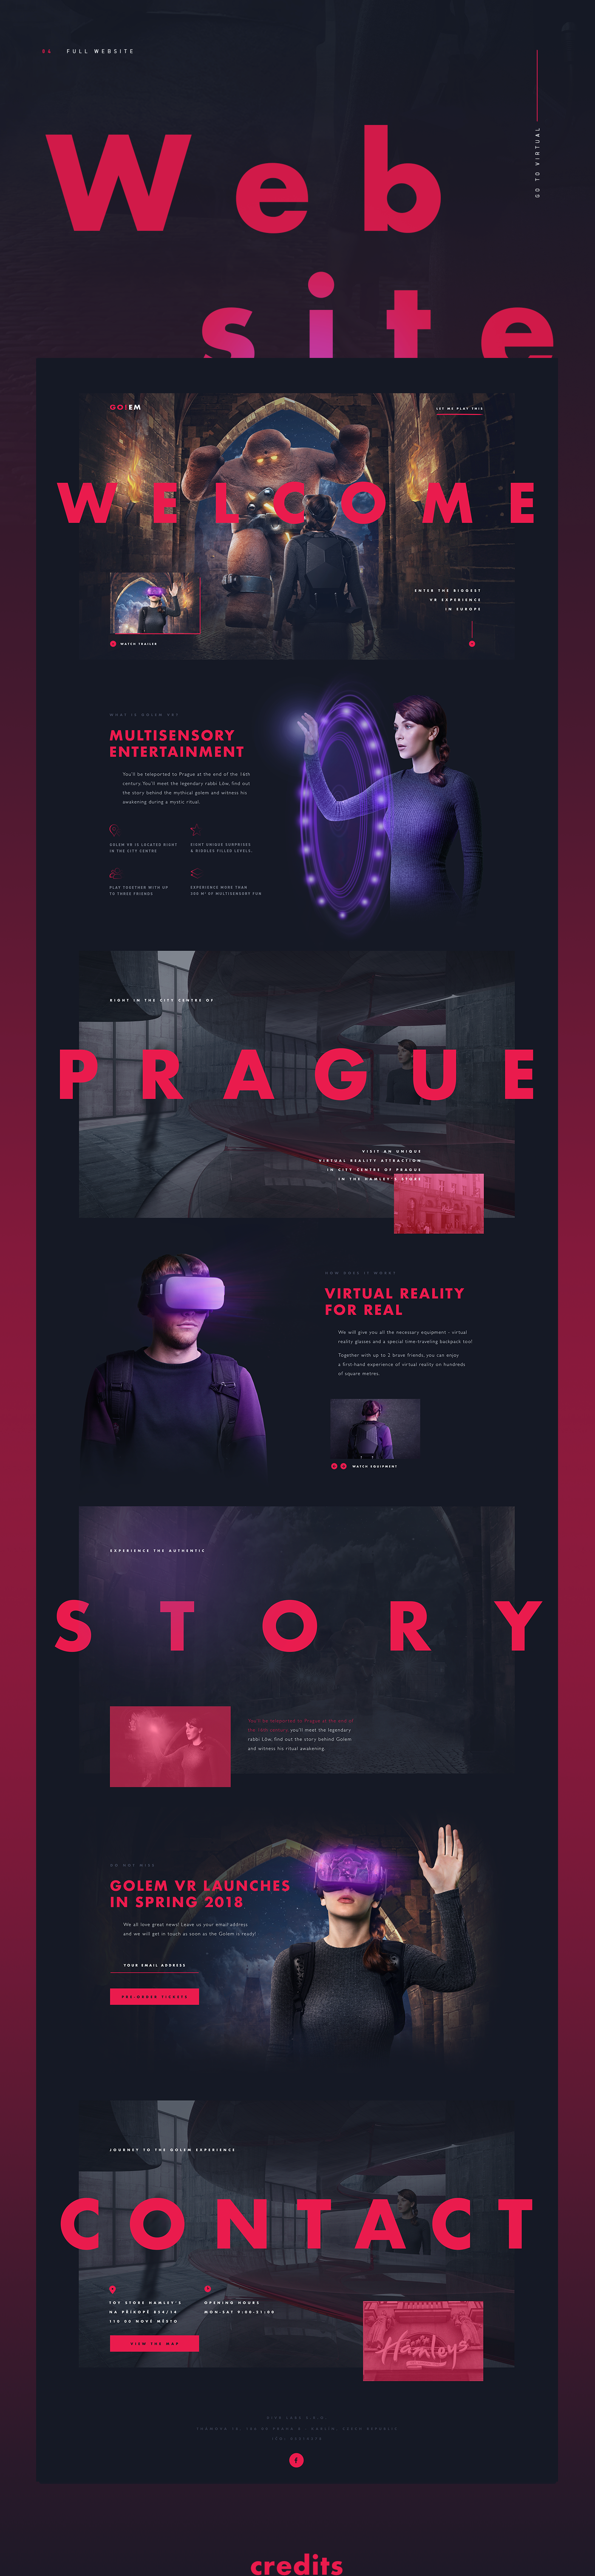 Web Design  ux/ui dark Virtual reality golem vr Futura animation  interaction